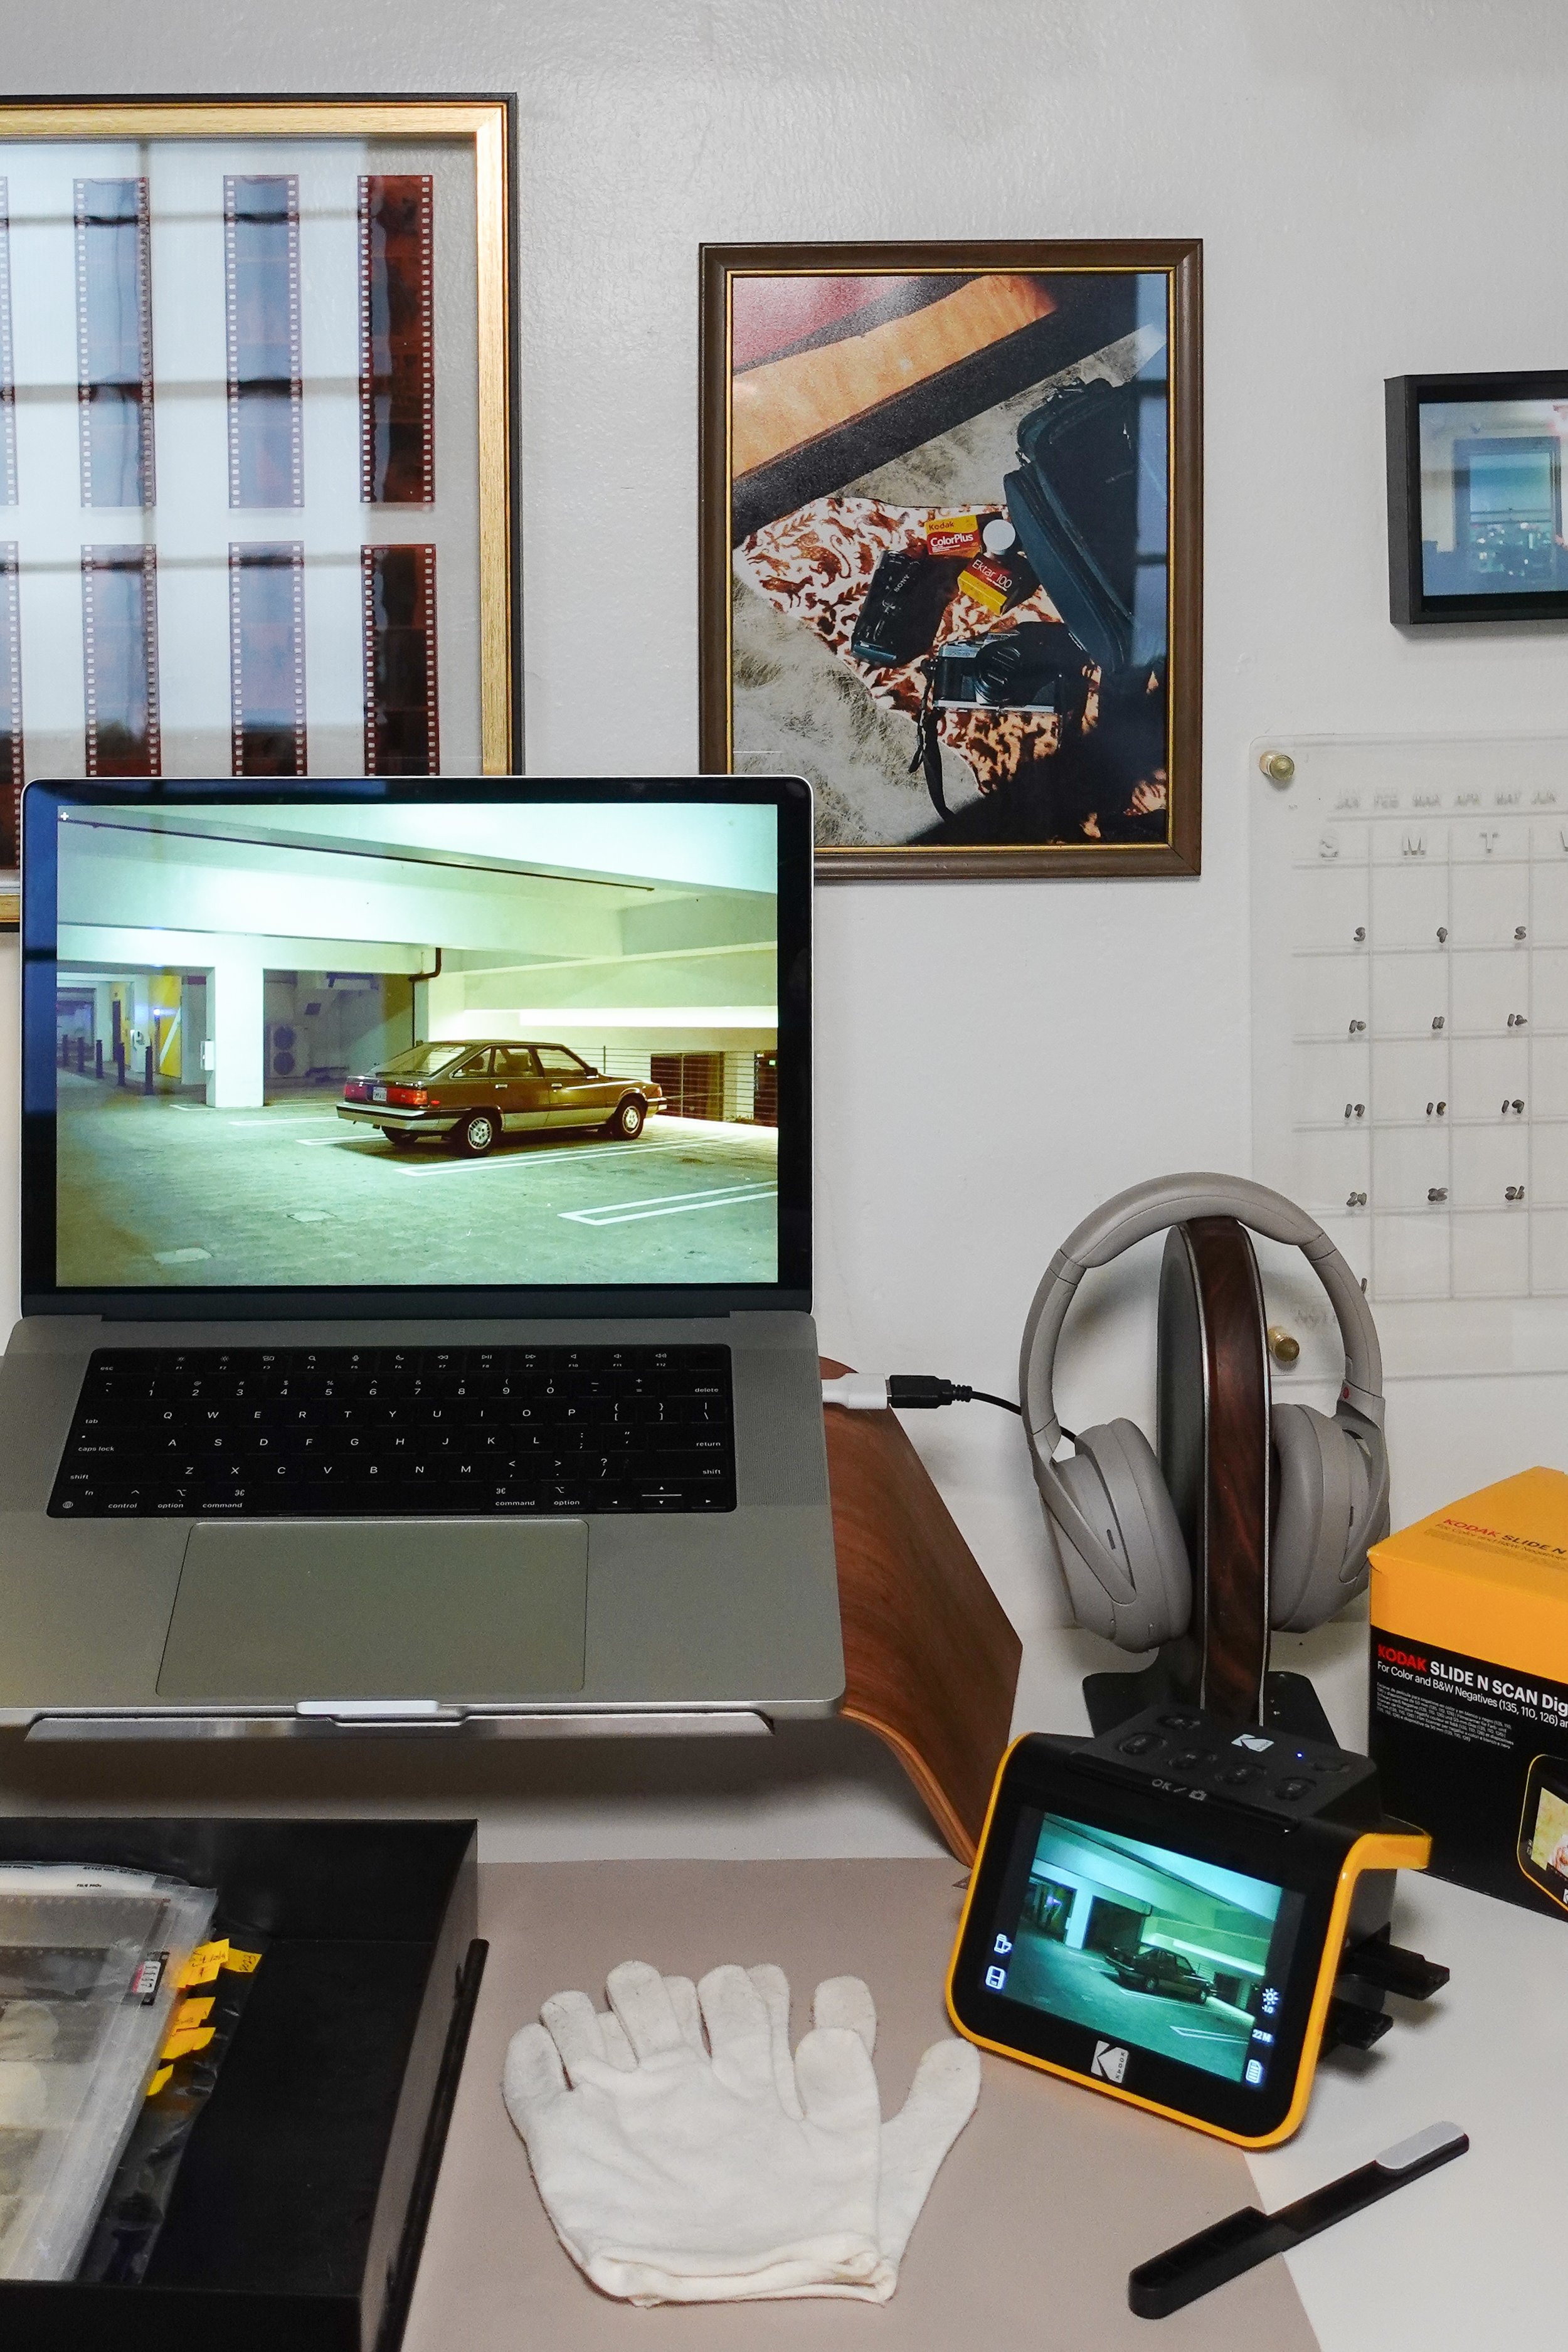 What's new at the Digital Media Stations? The Kodak Slide N Scan Digital Film  Scanner!